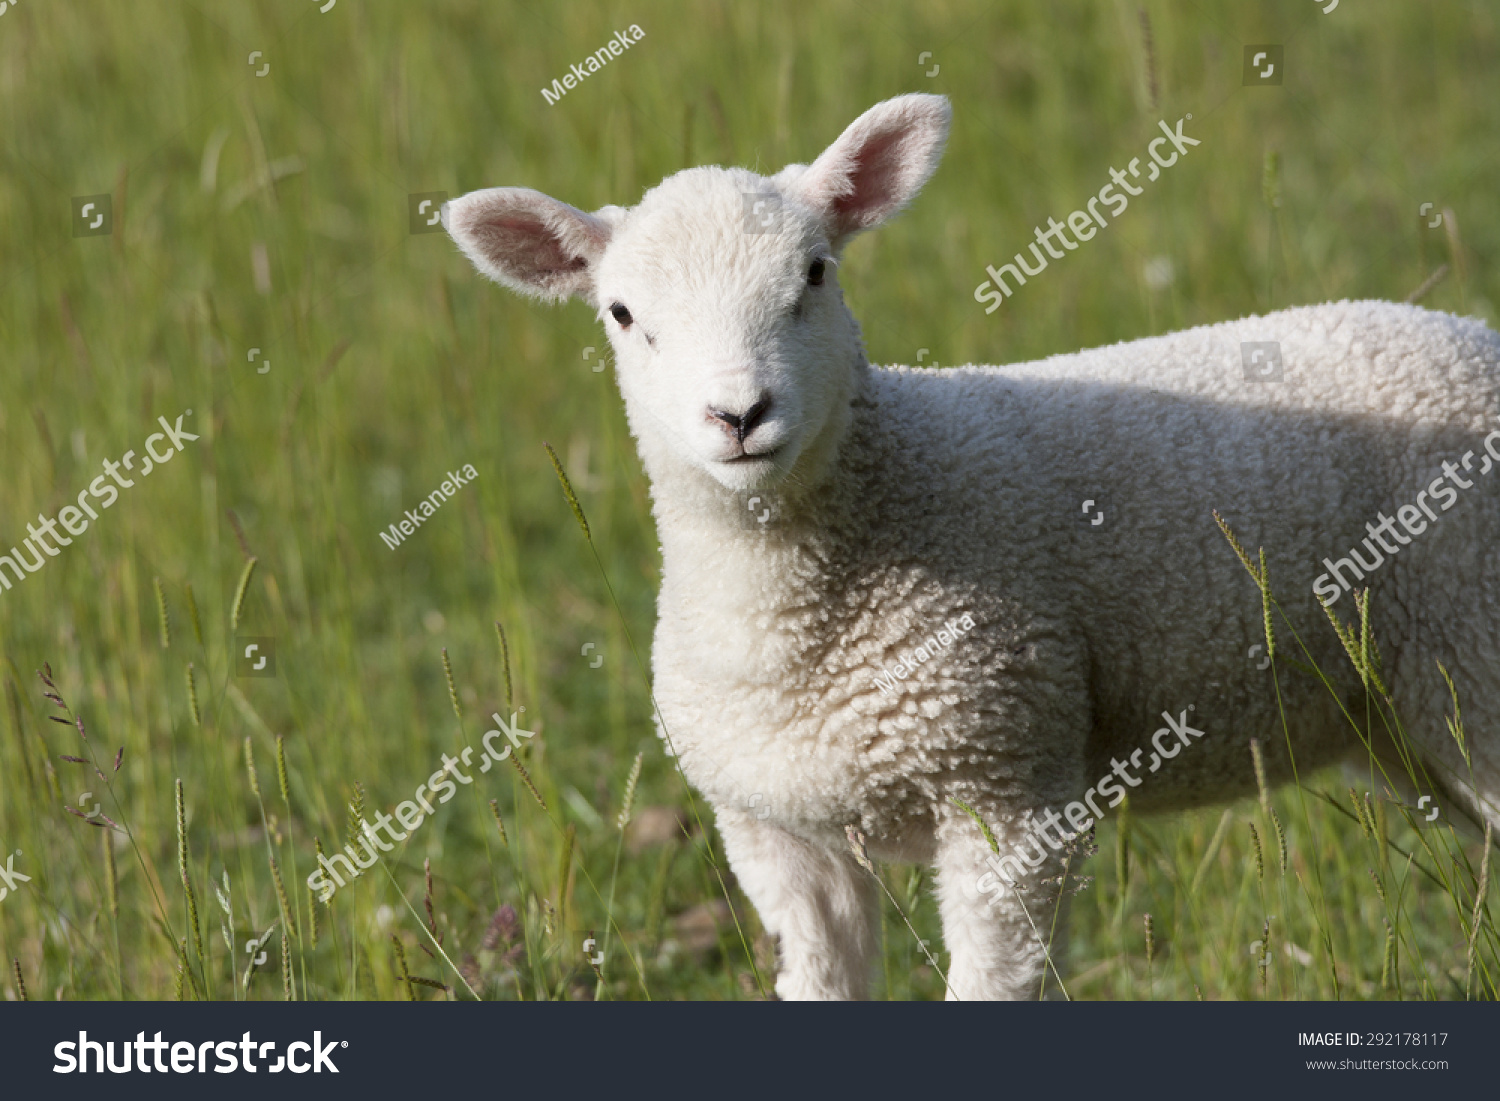 stock market jargon lamb